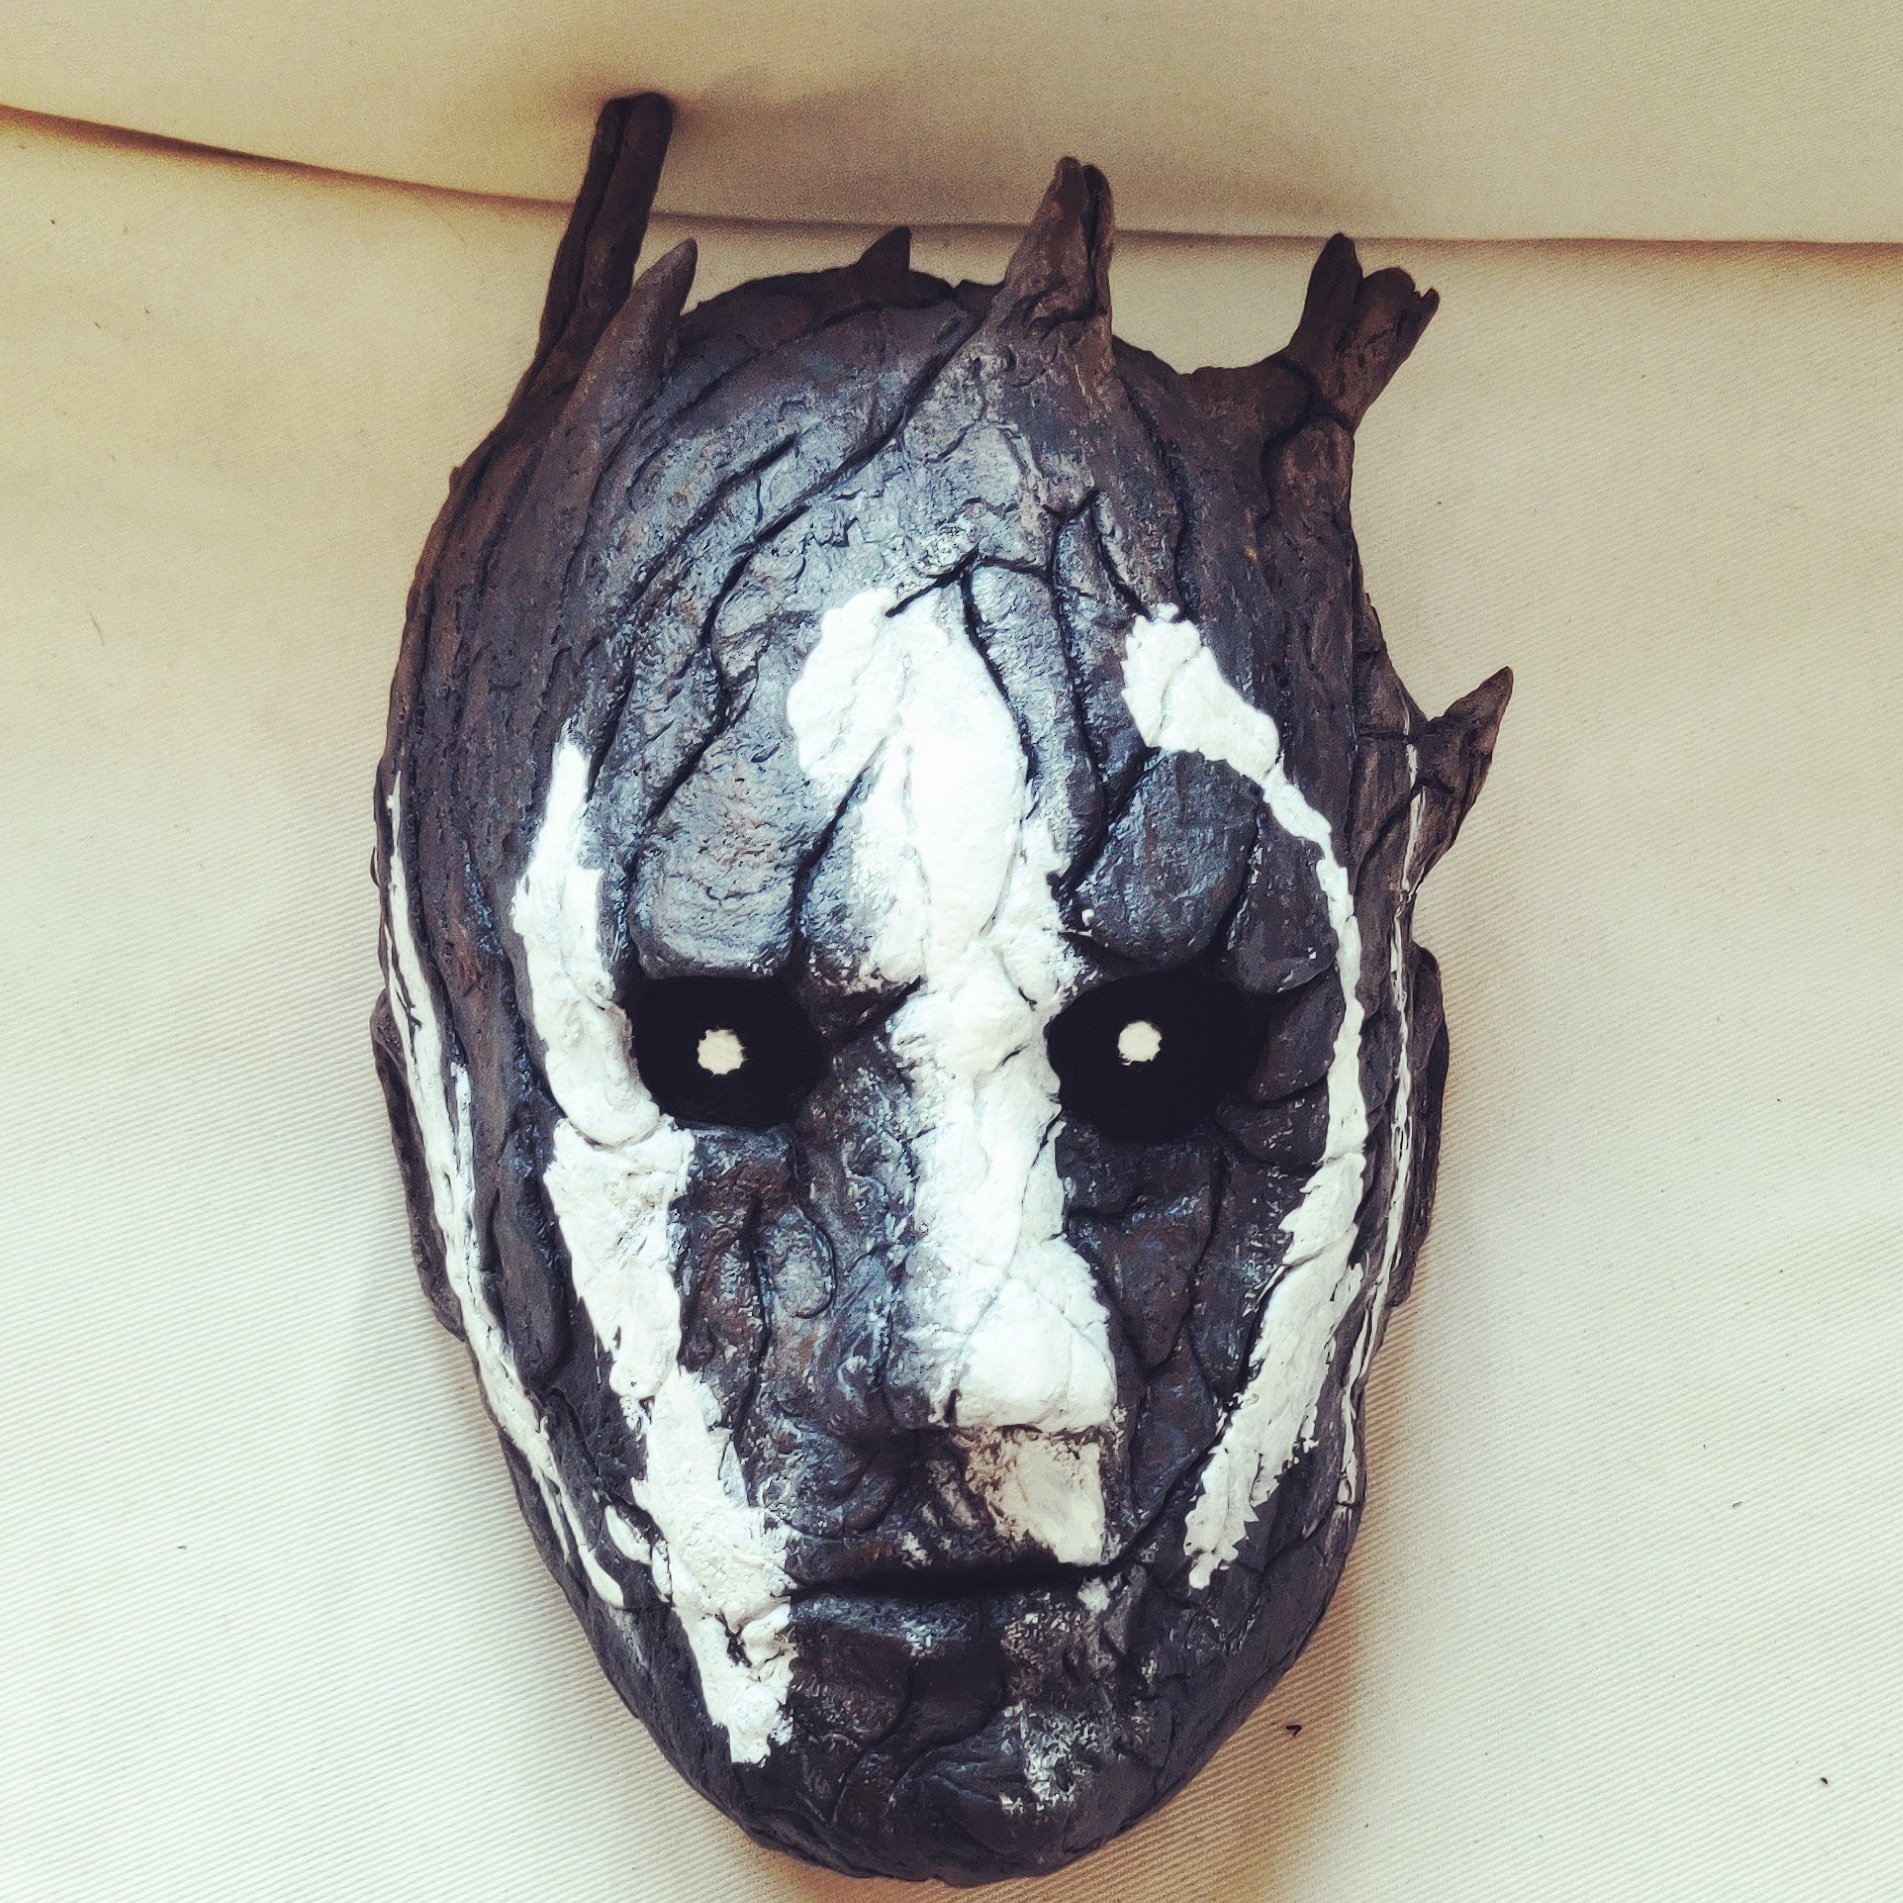 Tilståelse Ælte vokal emilcosplay on Twitter: "Here is my wraith mask that I re-painted not so  long ago🙂 https://t.co/S5dOz3017T" / Twitter